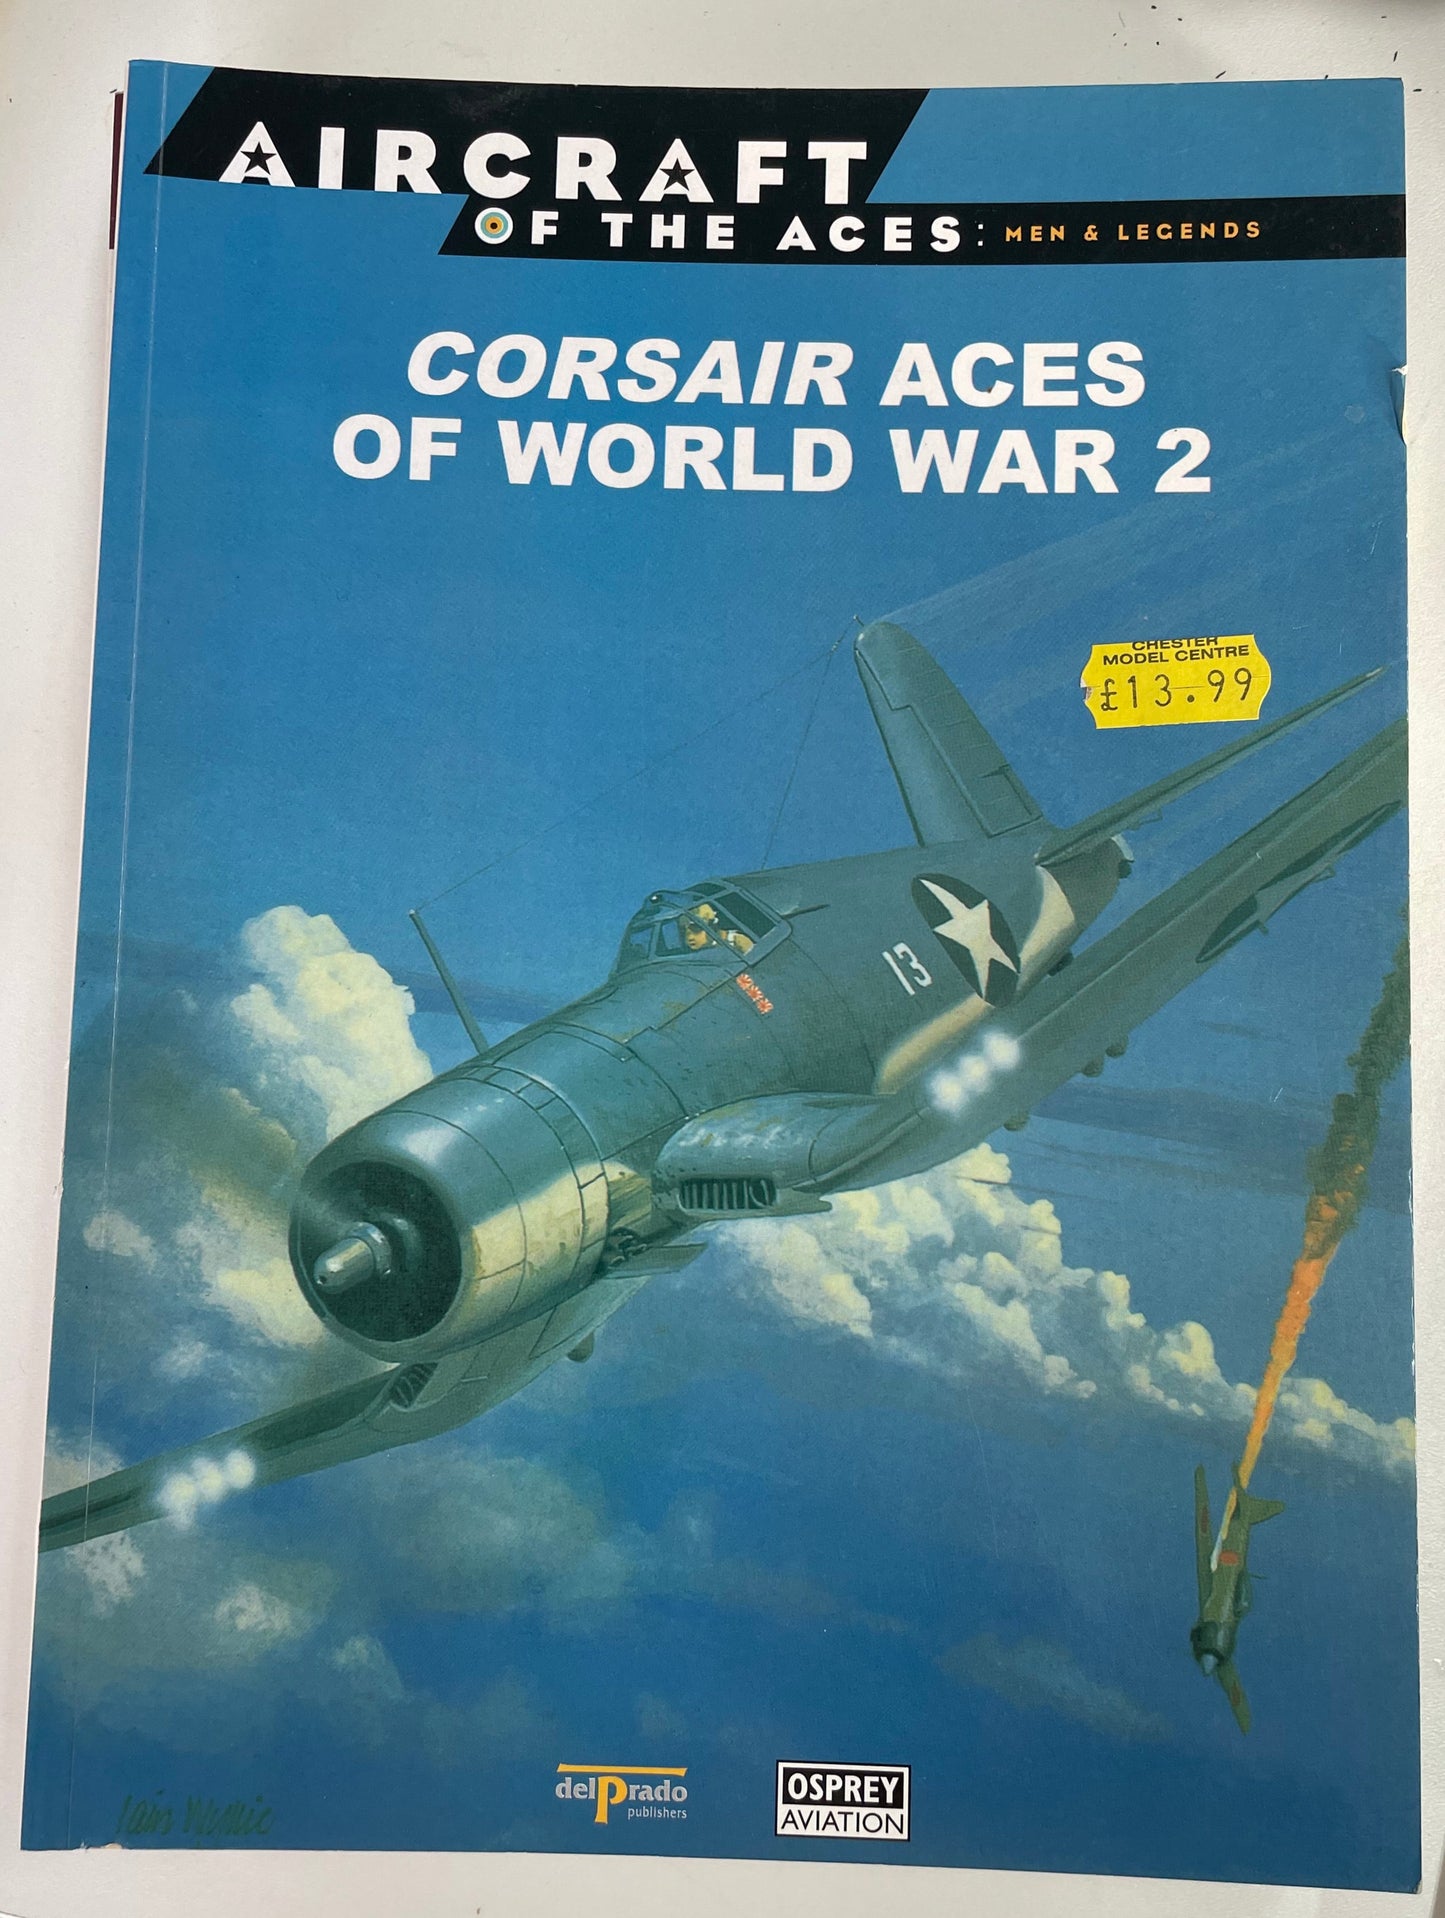 Aircraft of the Acces: Men & Legends - Corsair Aces of World War 2 - Chester Model Centre